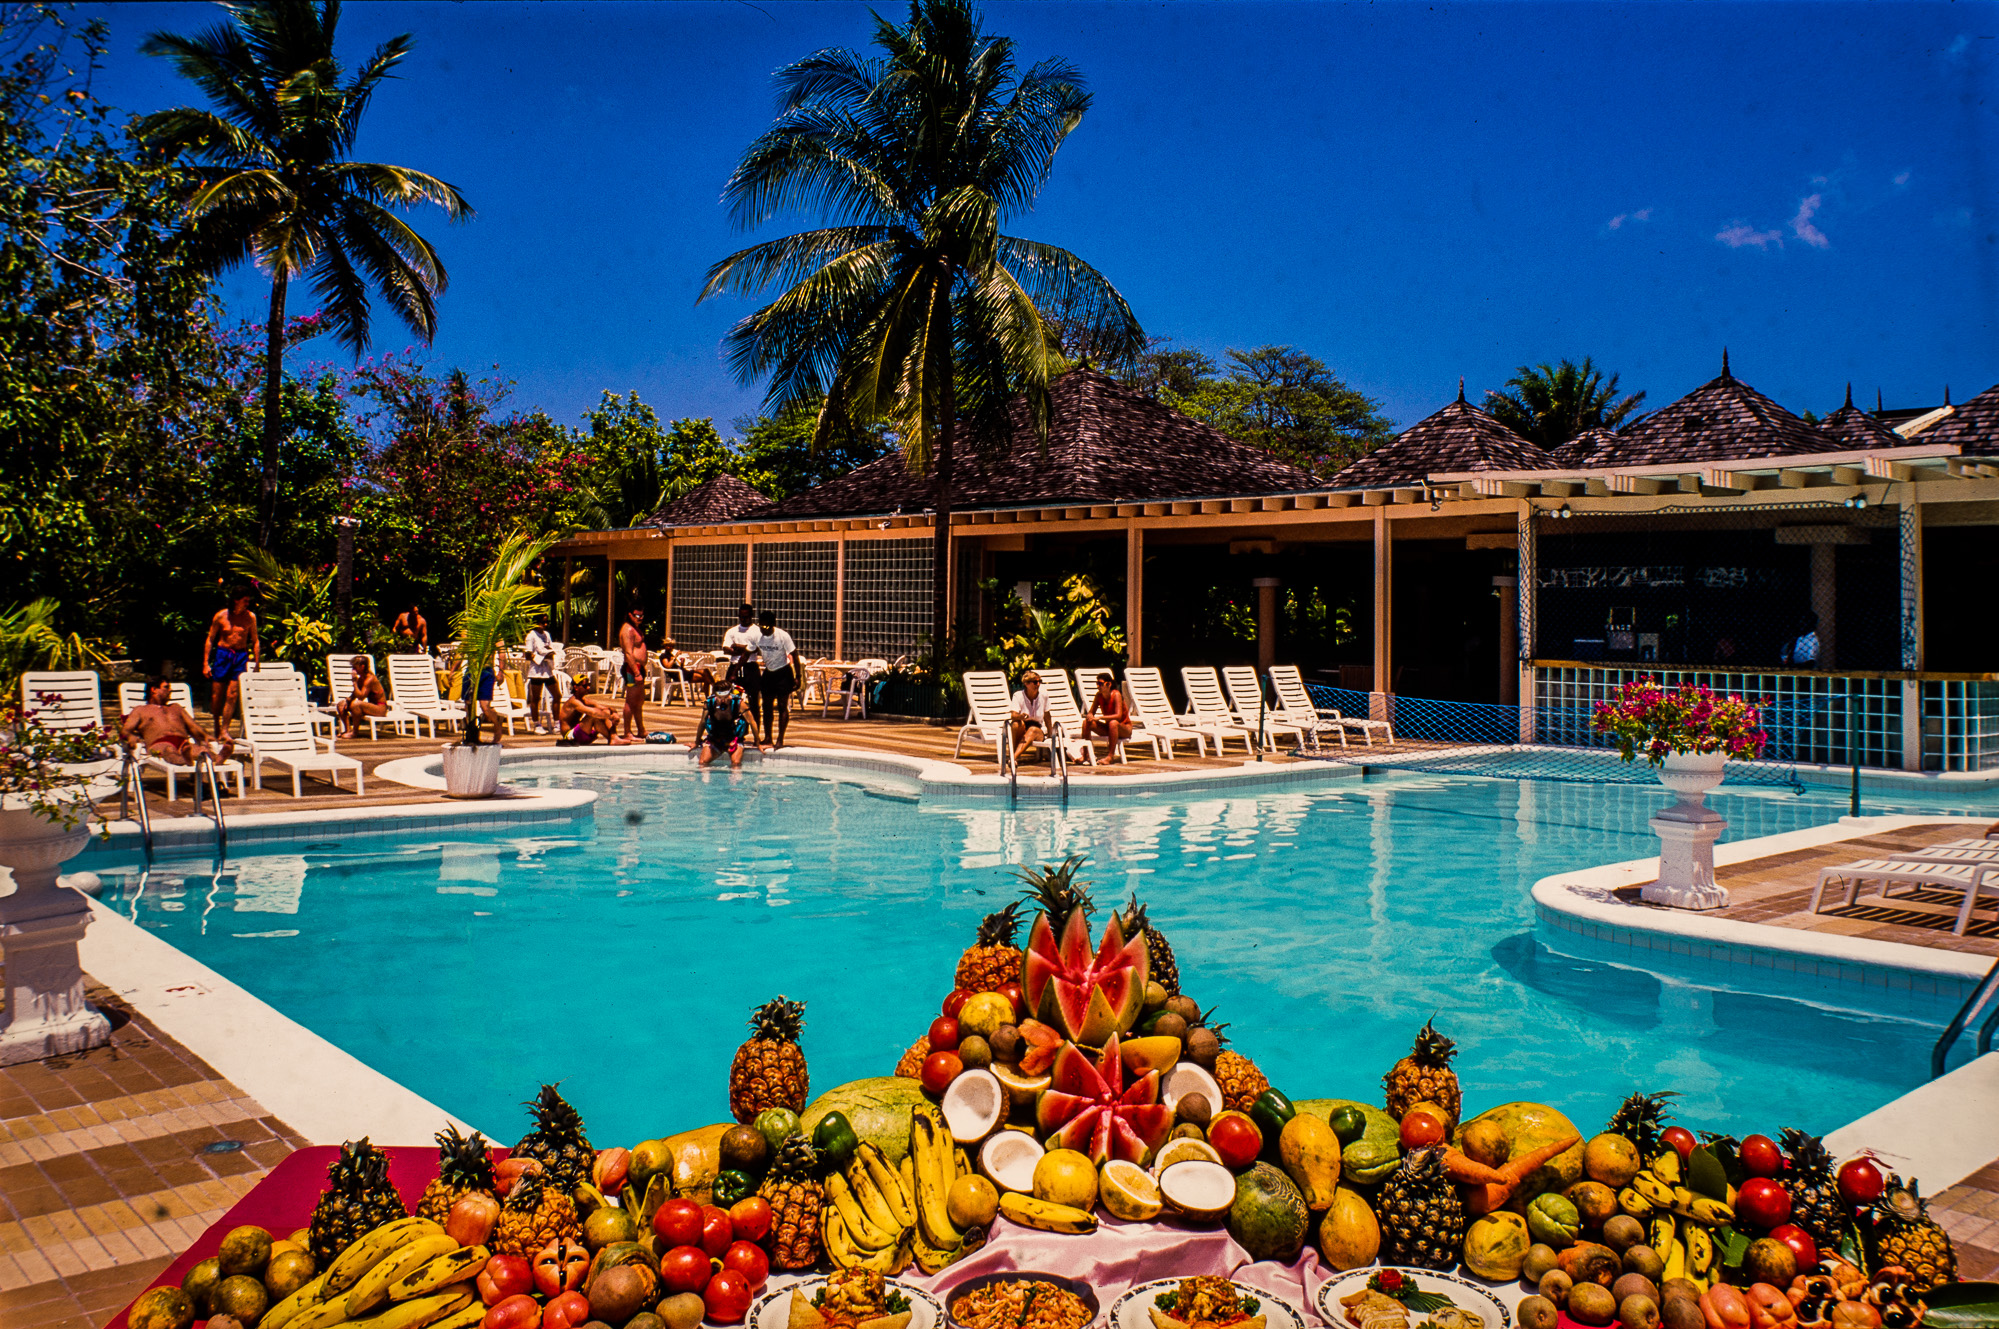 Hôtel Hedonism. Buffet de fruits exotiques devant la piscine.